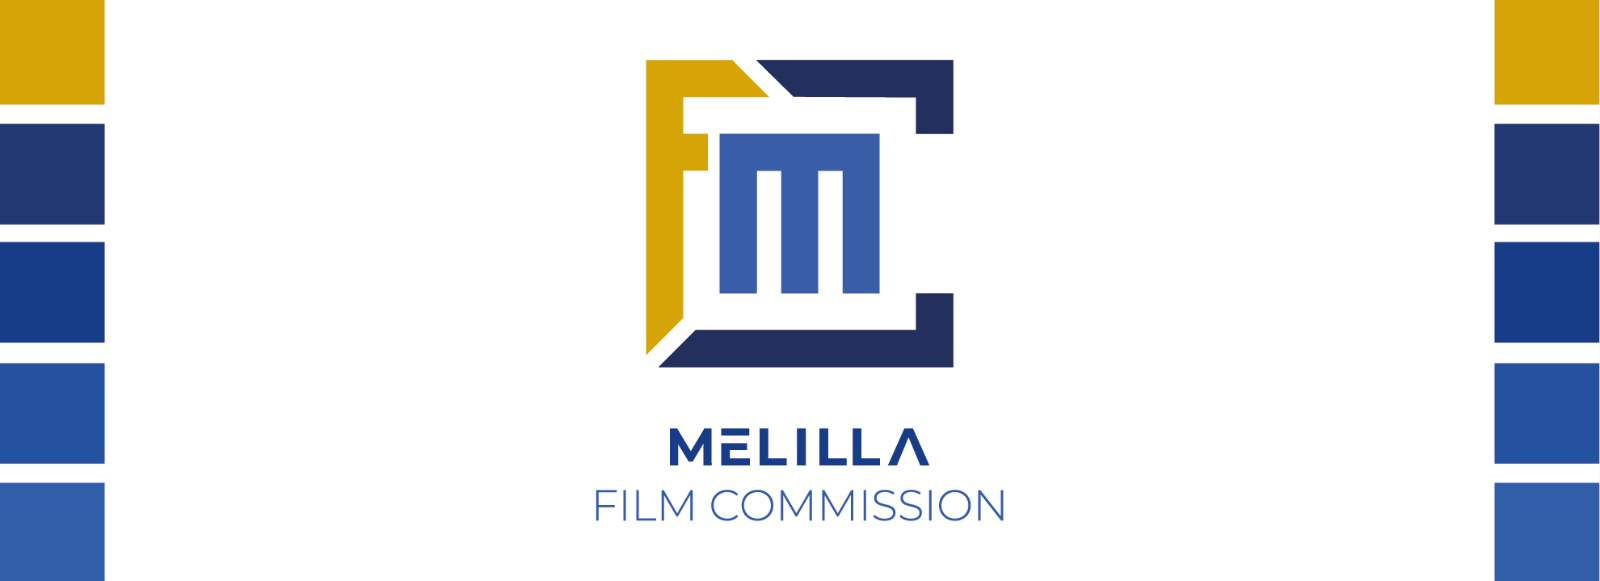 Melilla Film Commission 